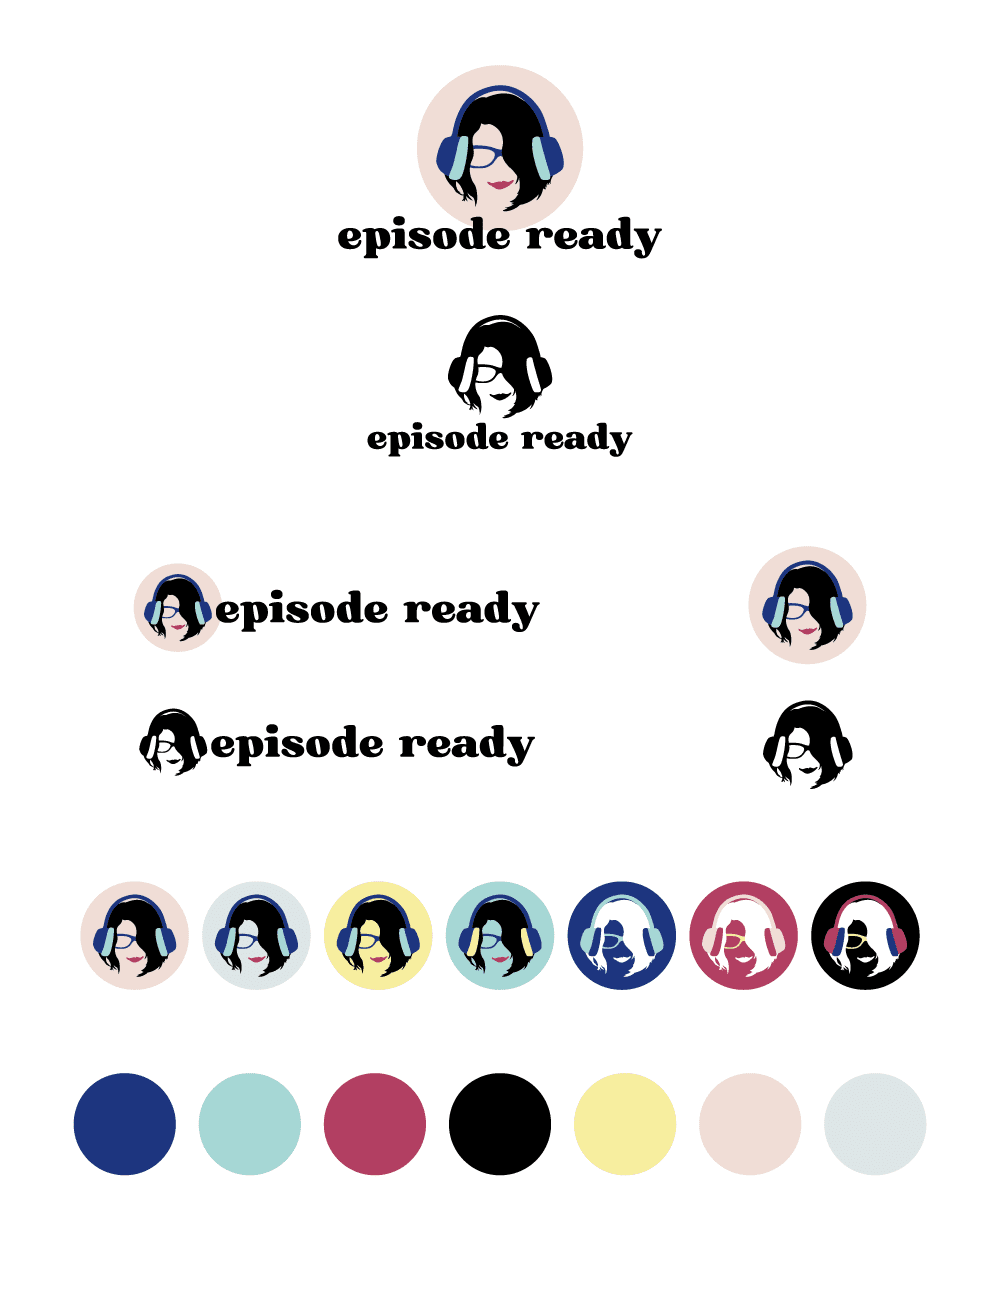 Episode Ready logo suite